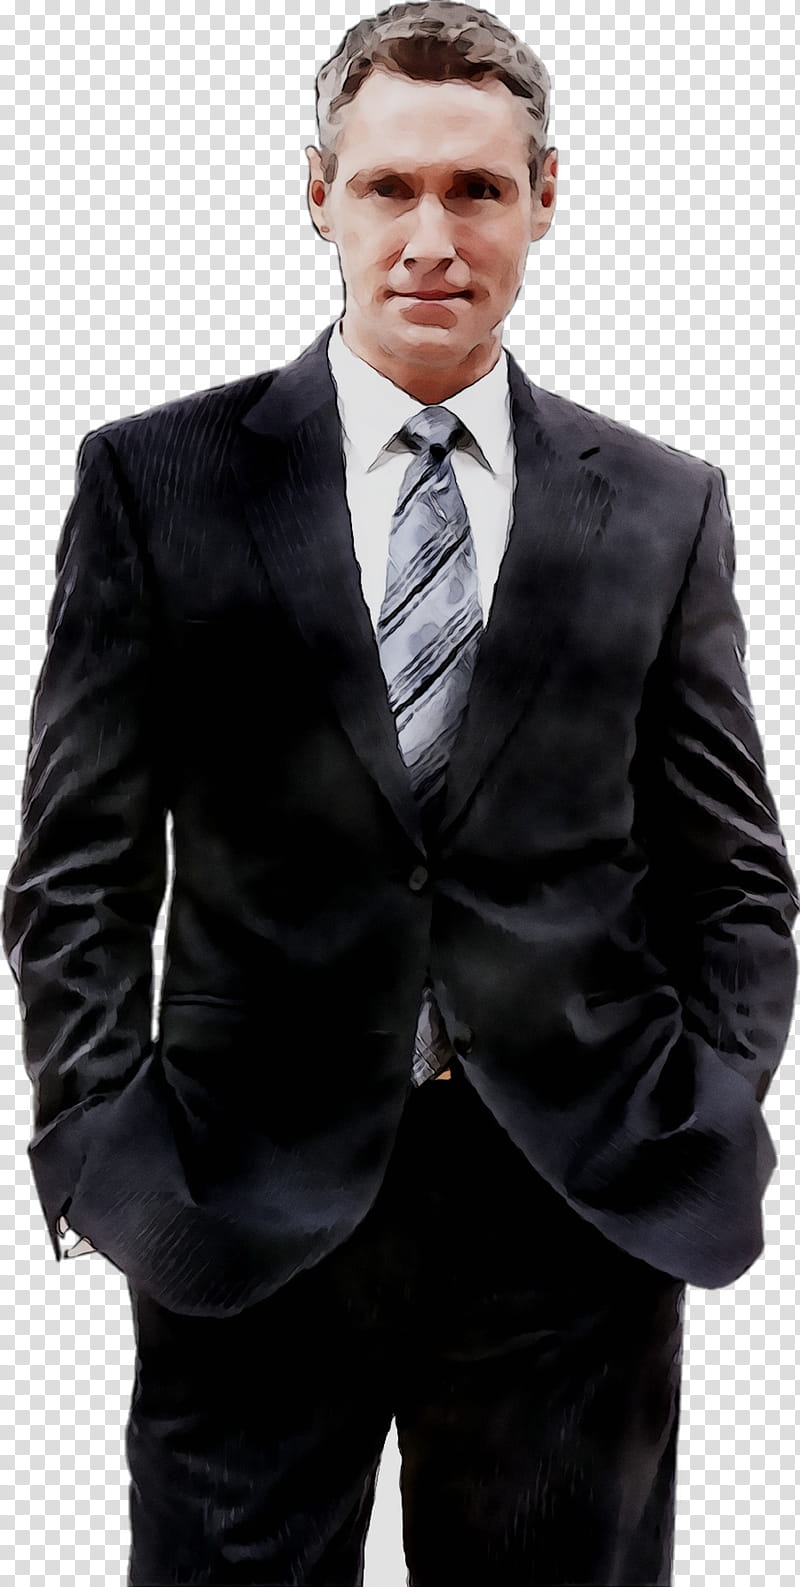 Bow Tie, Suit, Tuxedo, Necktie, Man, Clothing, Formal Wear, Informal Wear transparent background PNG clipart